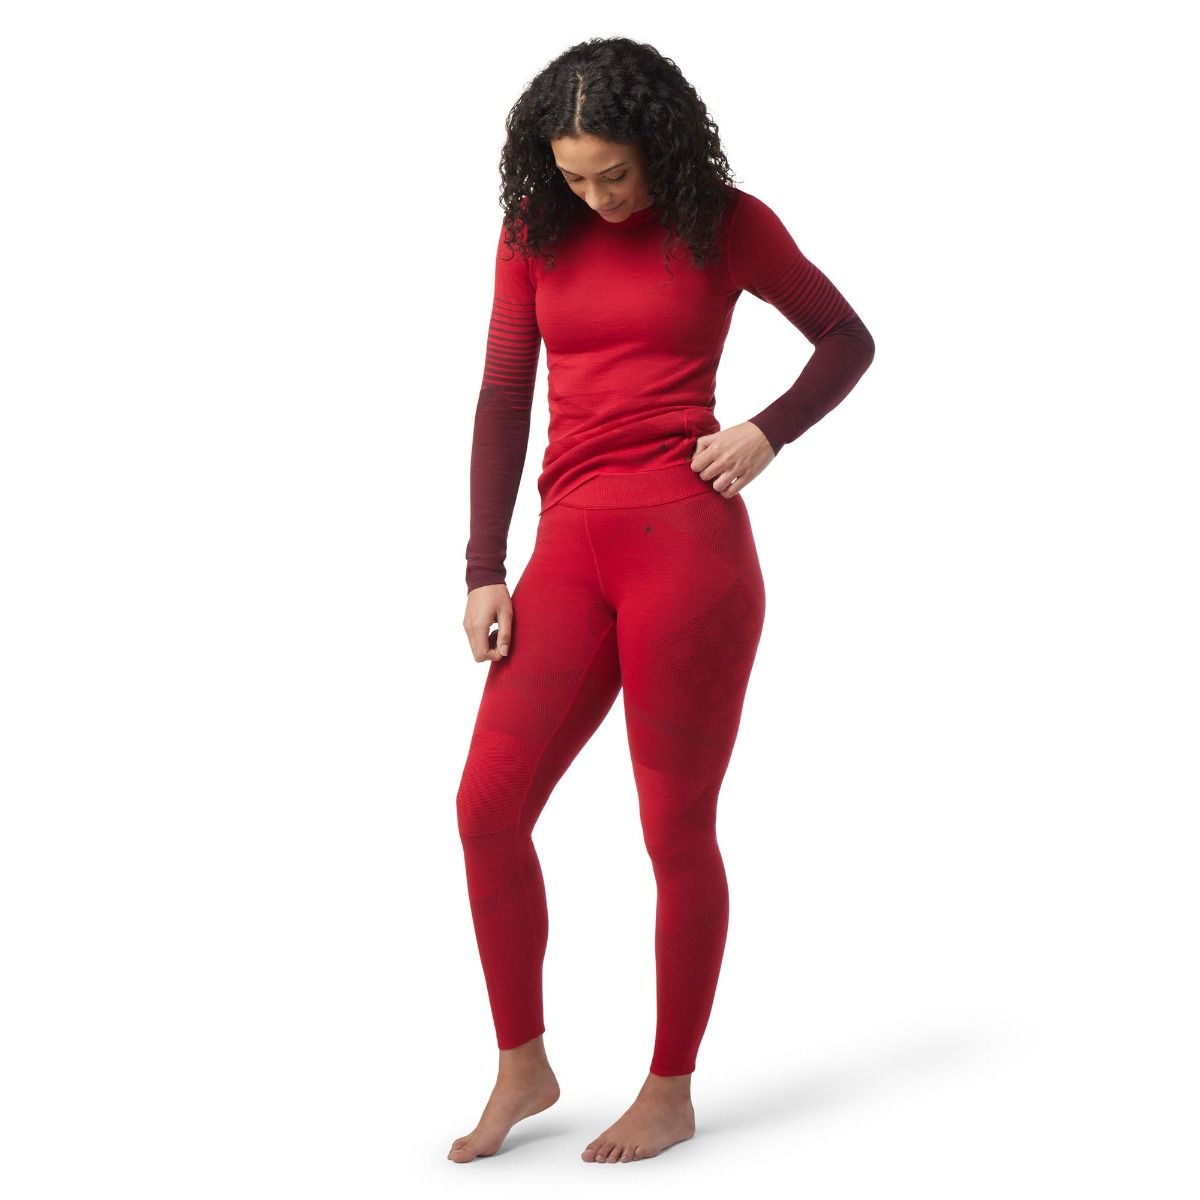 Merino Wool Thermal Base Layer Set For Women Lightweight, Anti Odor &  Versatile Underwear From Diao03, $56.95